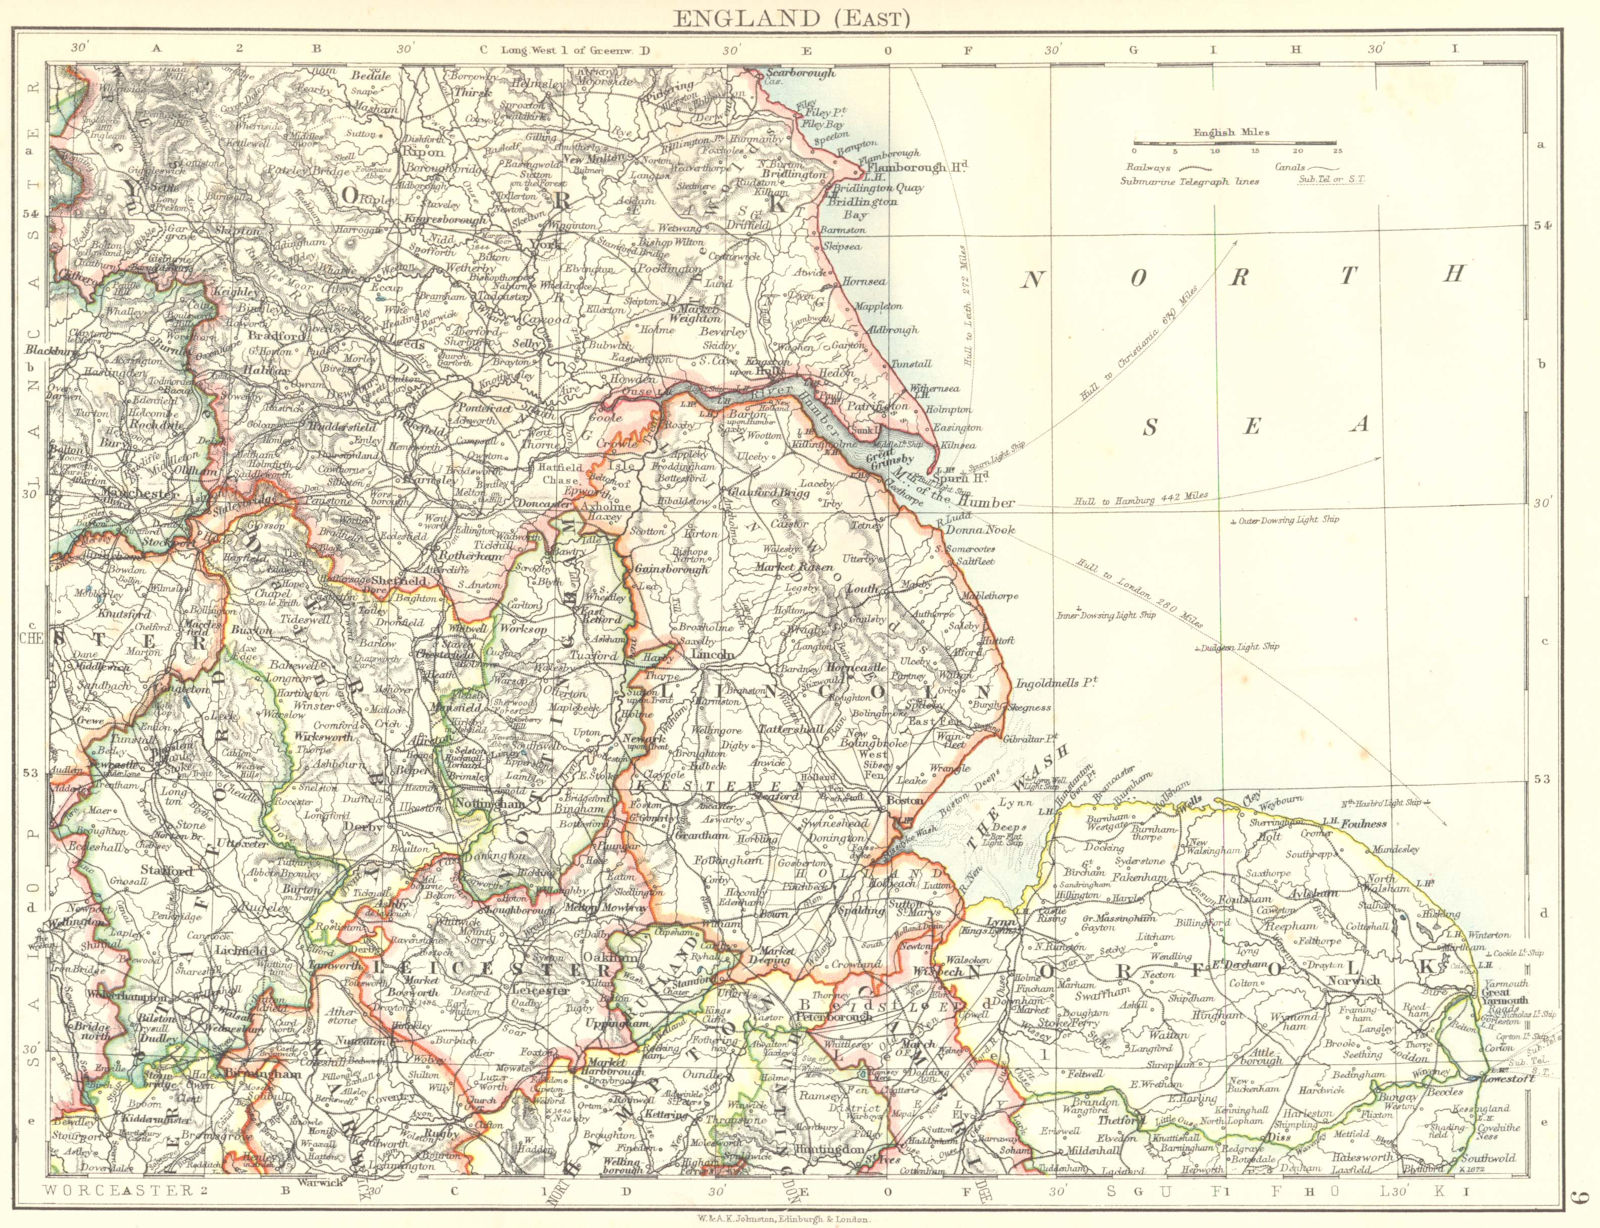 EAST ENGLAND. Lincs Norfolk Leics Notts Staffs Derbys Yorks. JOHNSTON 1899 map